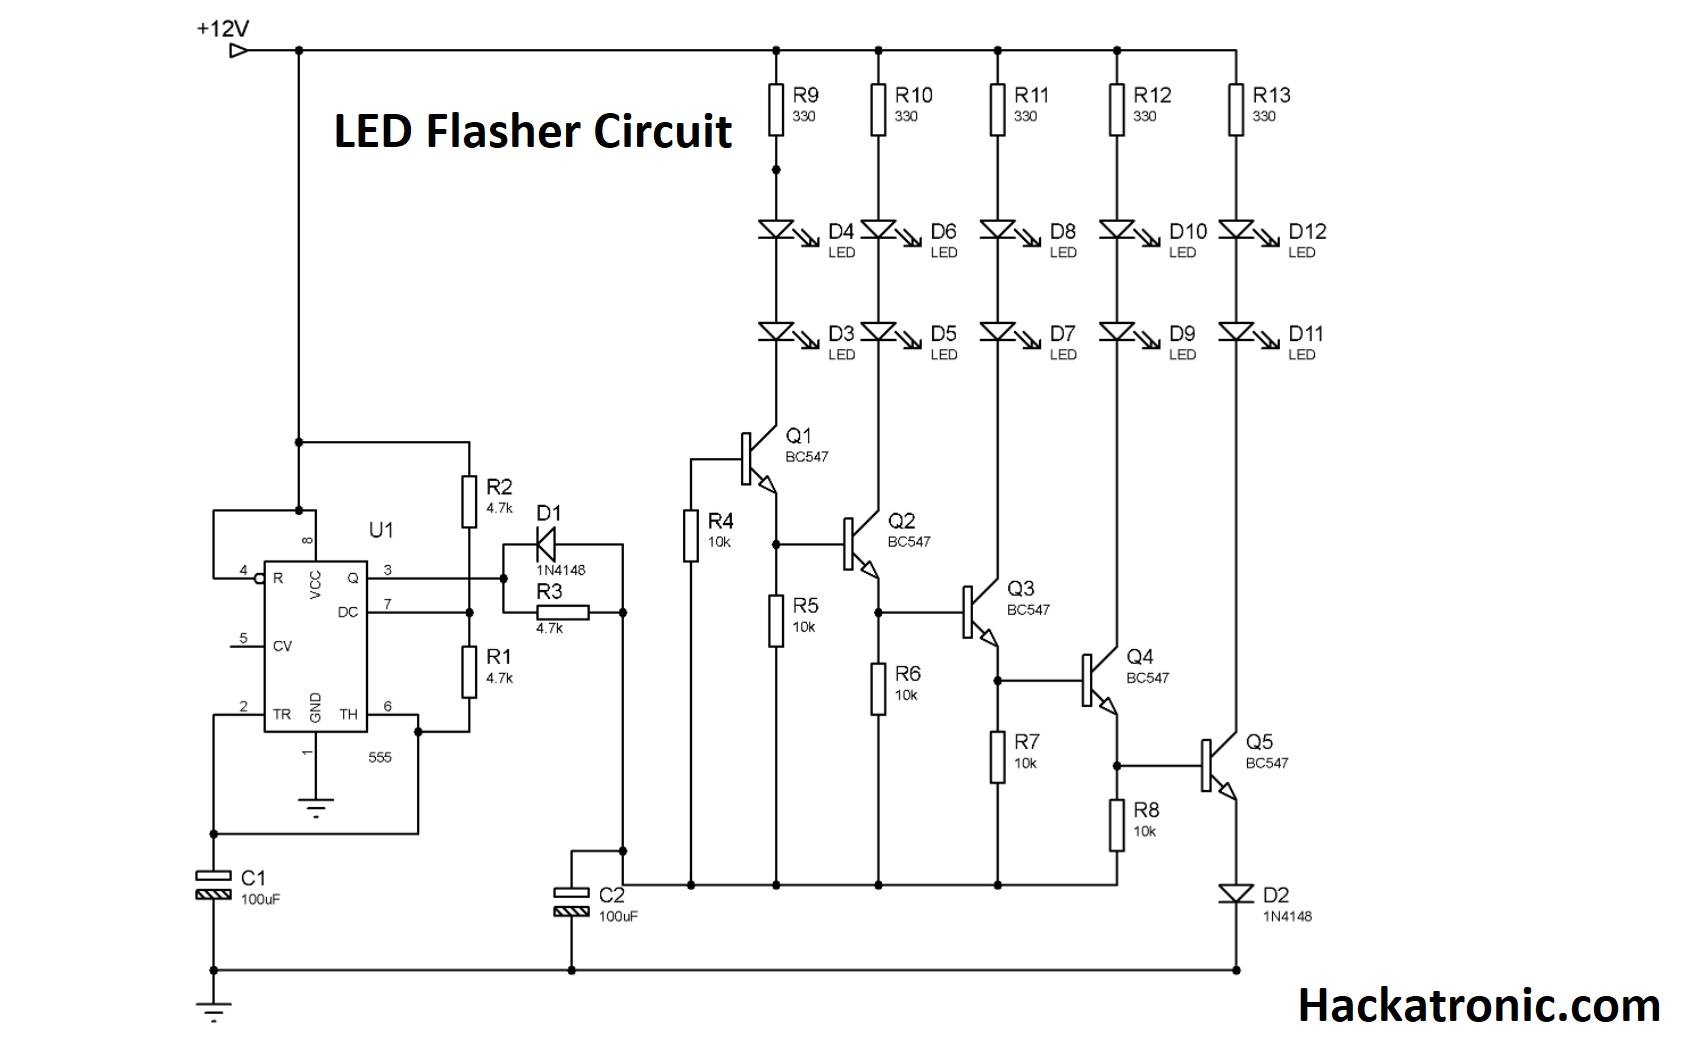 Circuit Diagram of LED Flasher